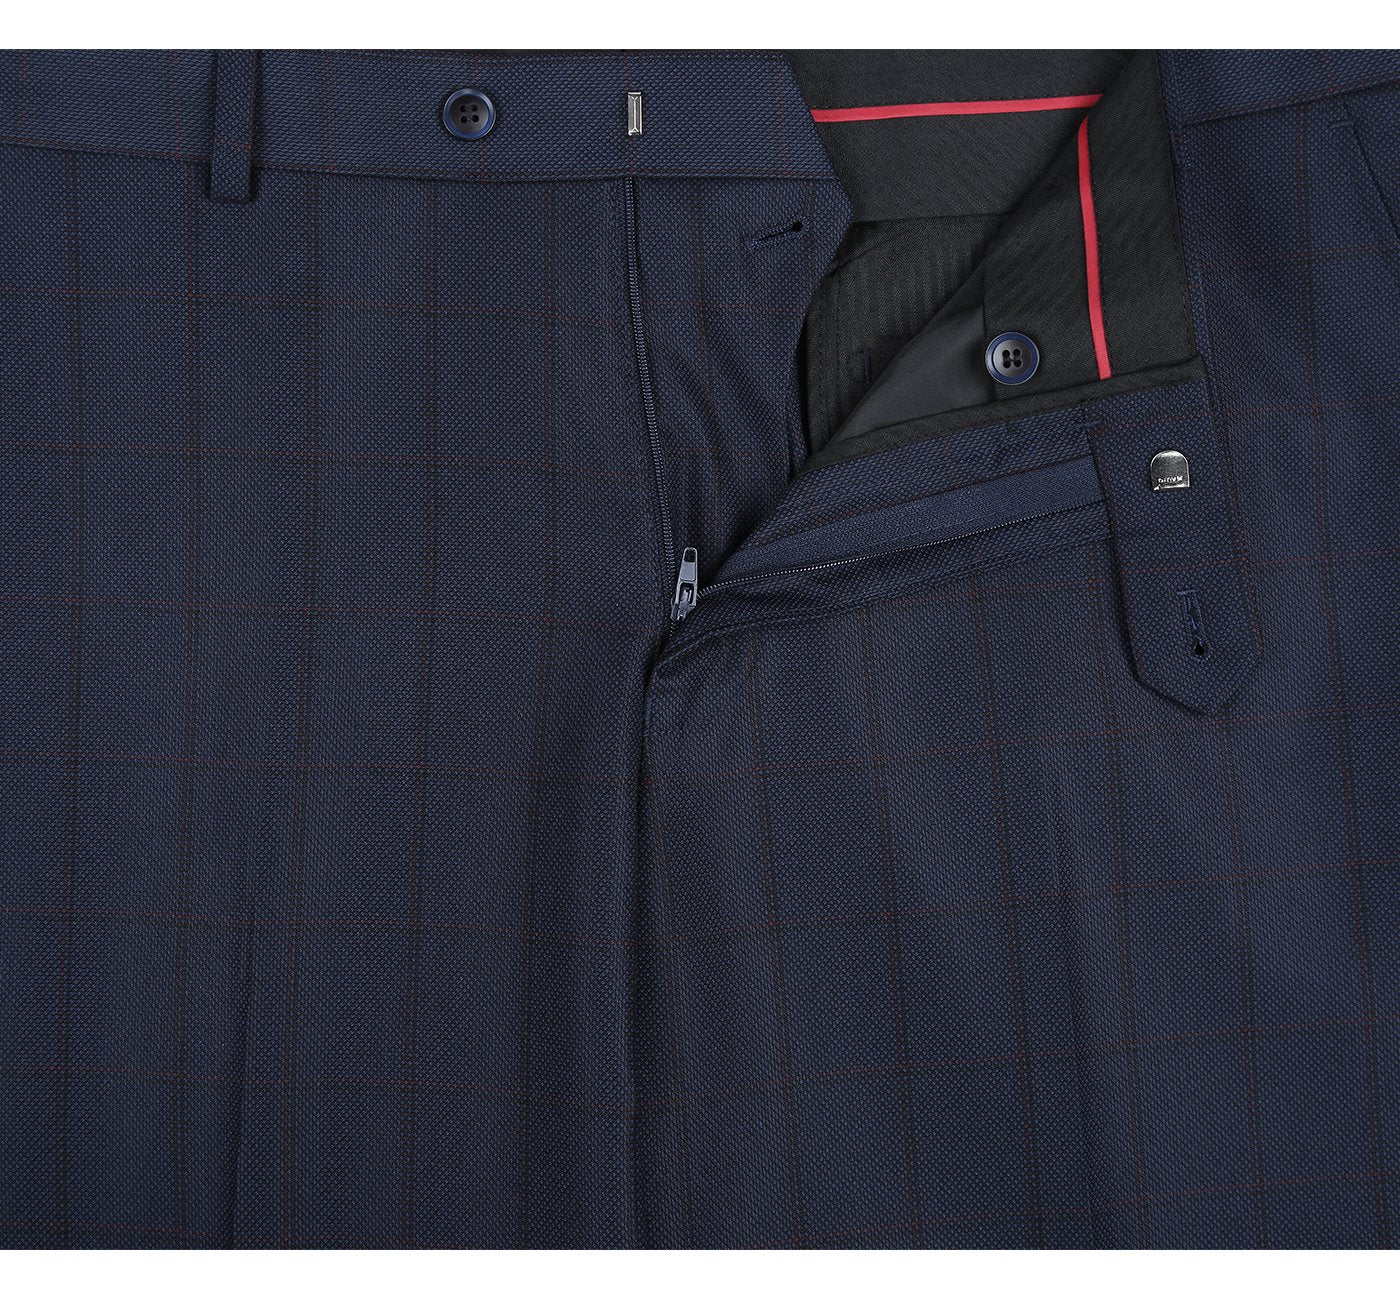 Men’s Two Piece Classic Fit Windowpane Check Dress Suit 8